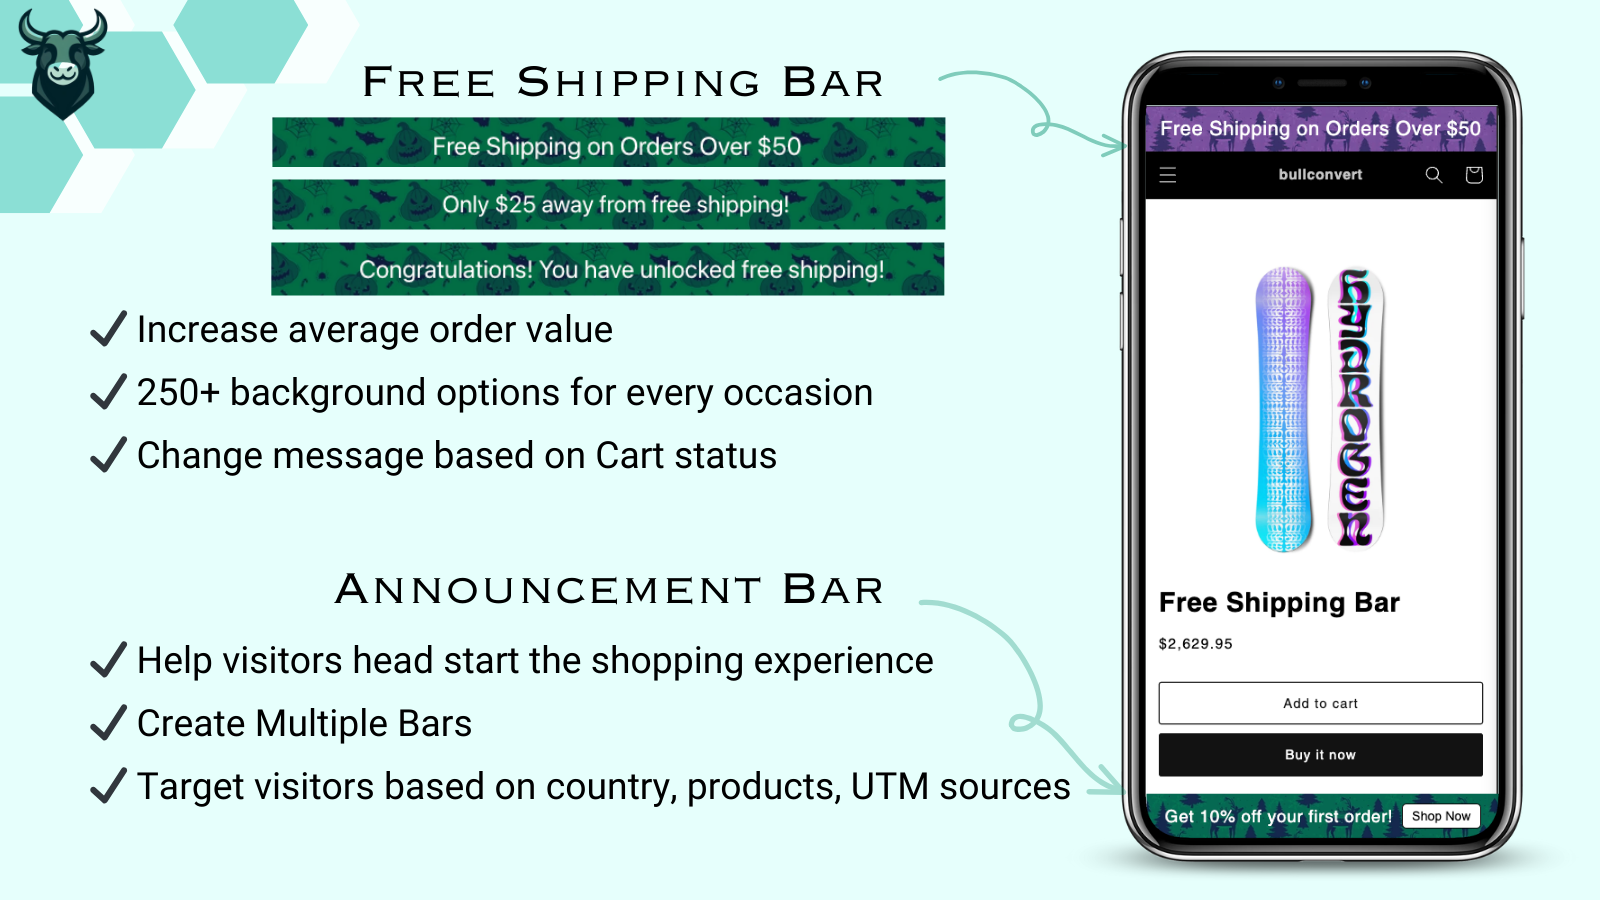 Free Shipping Bar (FSB) and Announcement Bar (Promotion Bar)